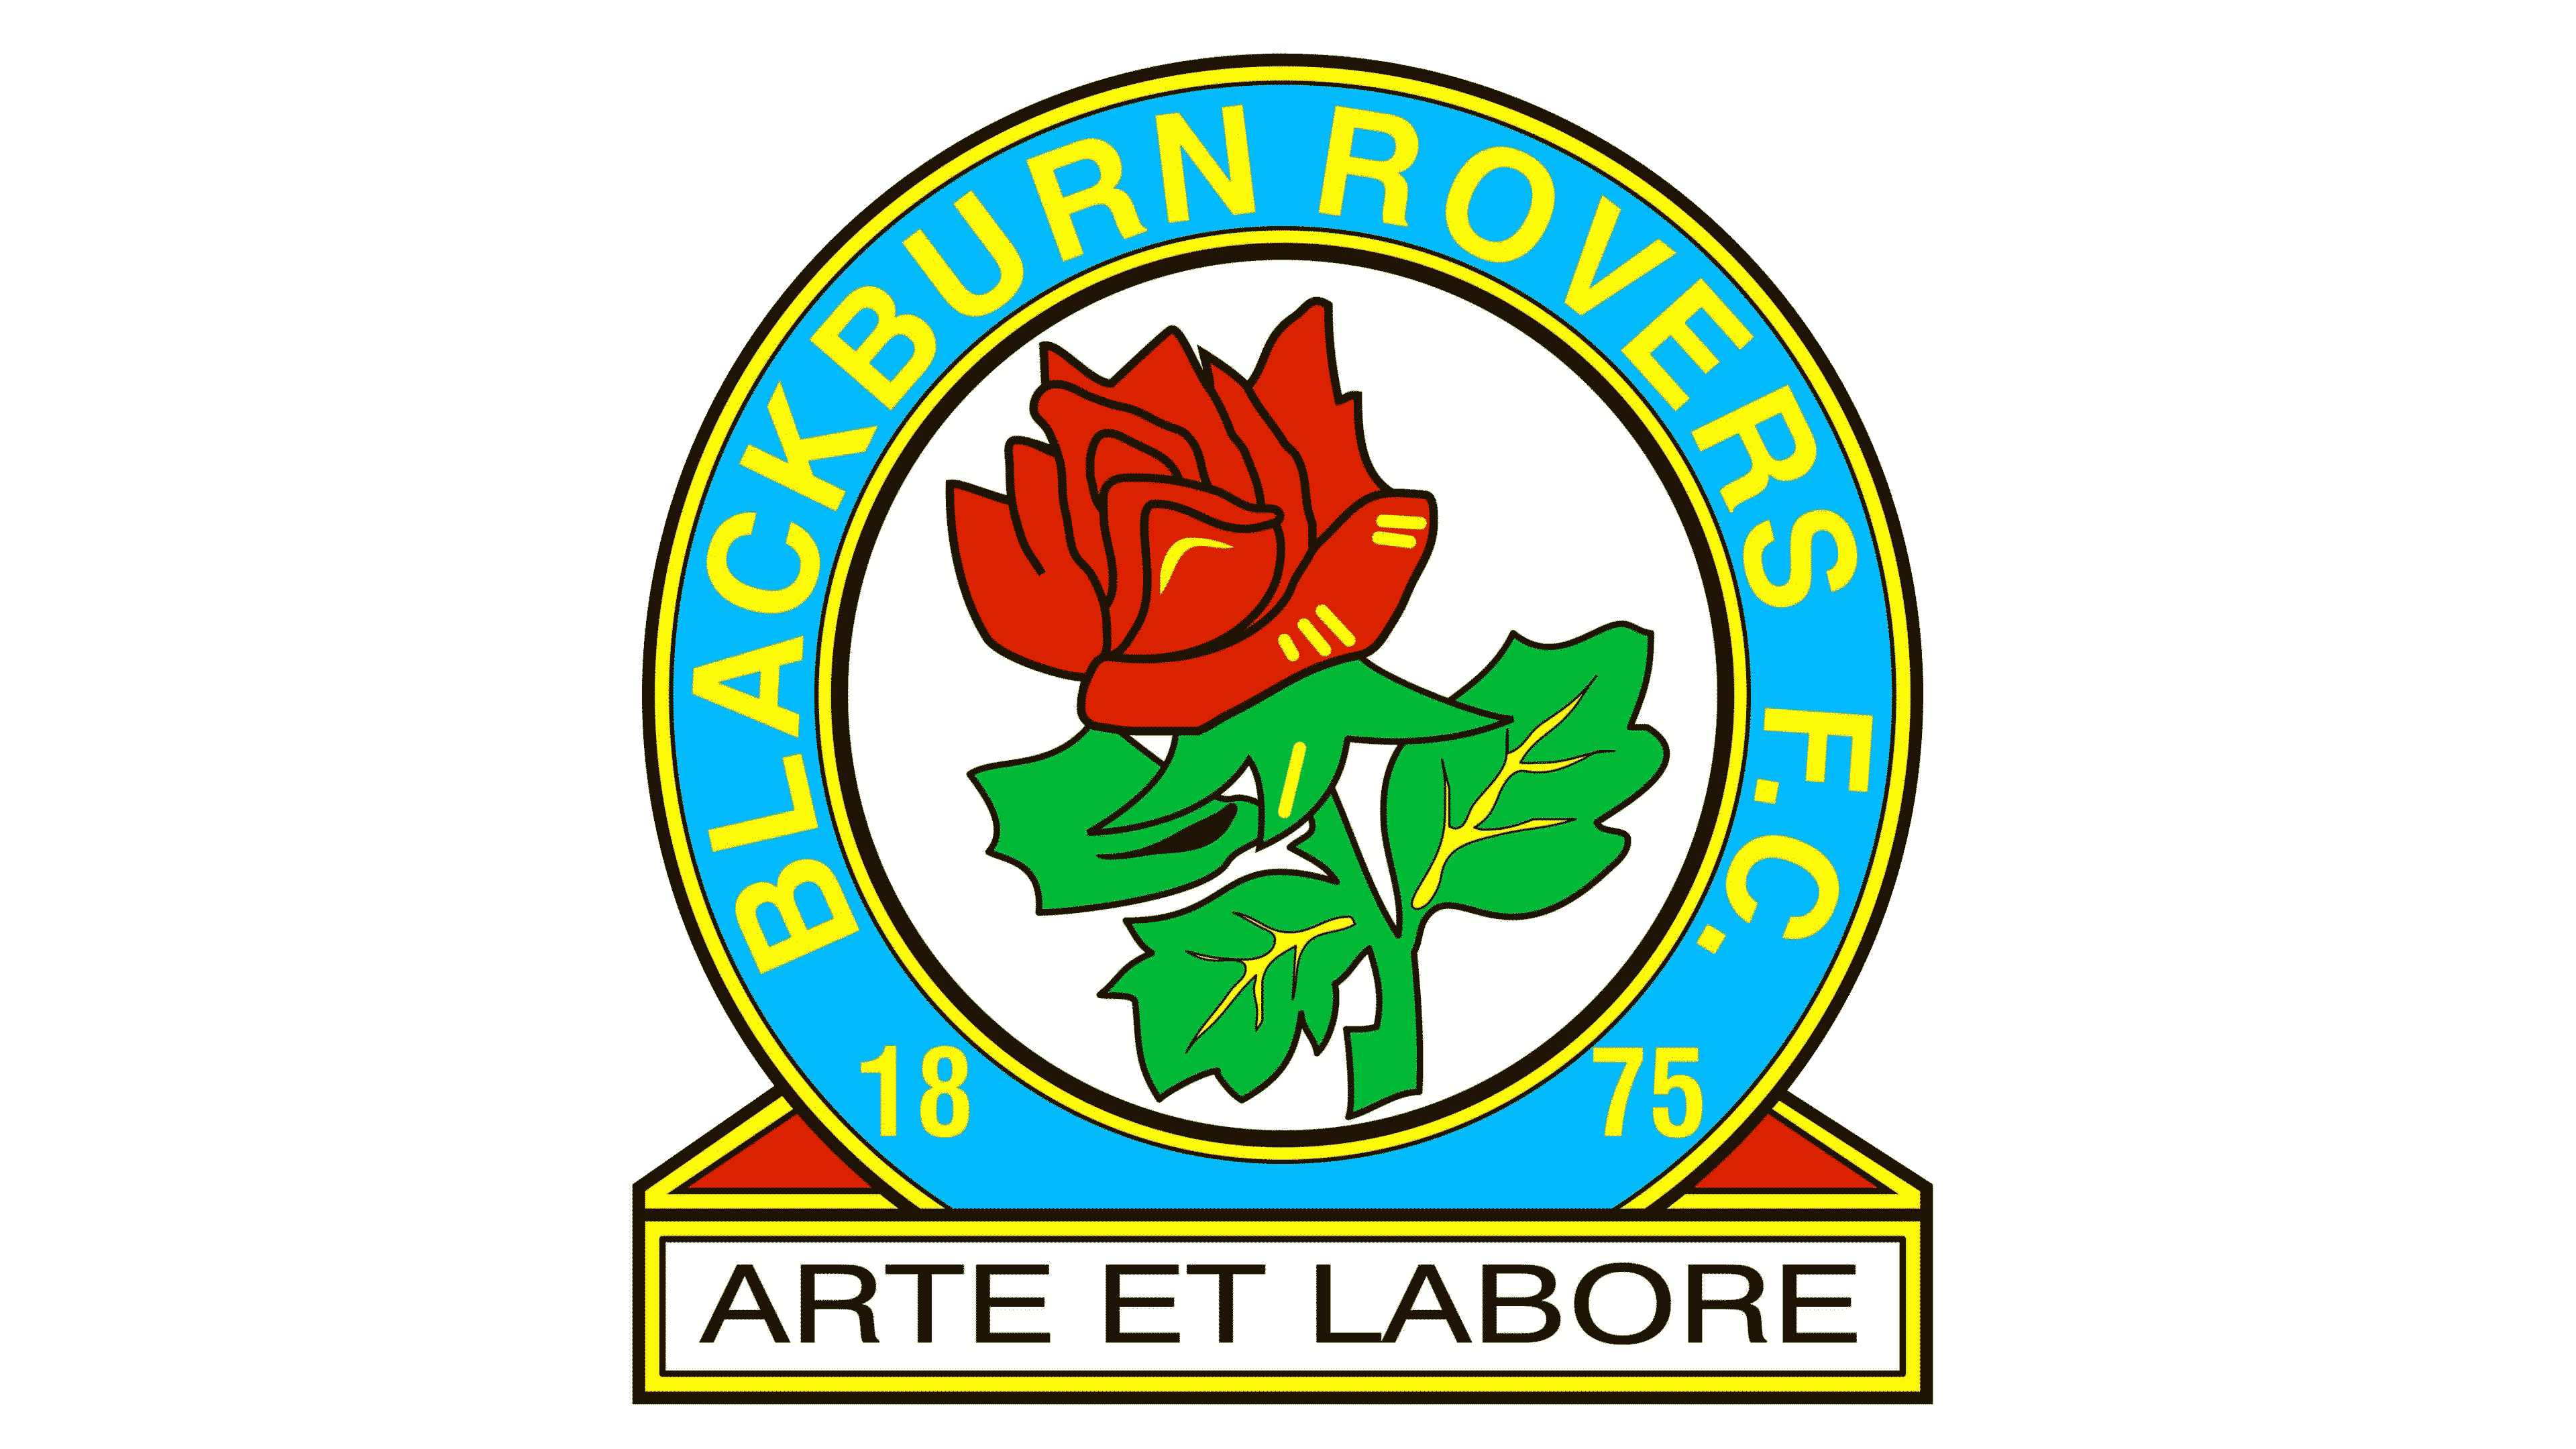 1996 Merlin Soccer Club Emblem E3 Blackburn Rovers 